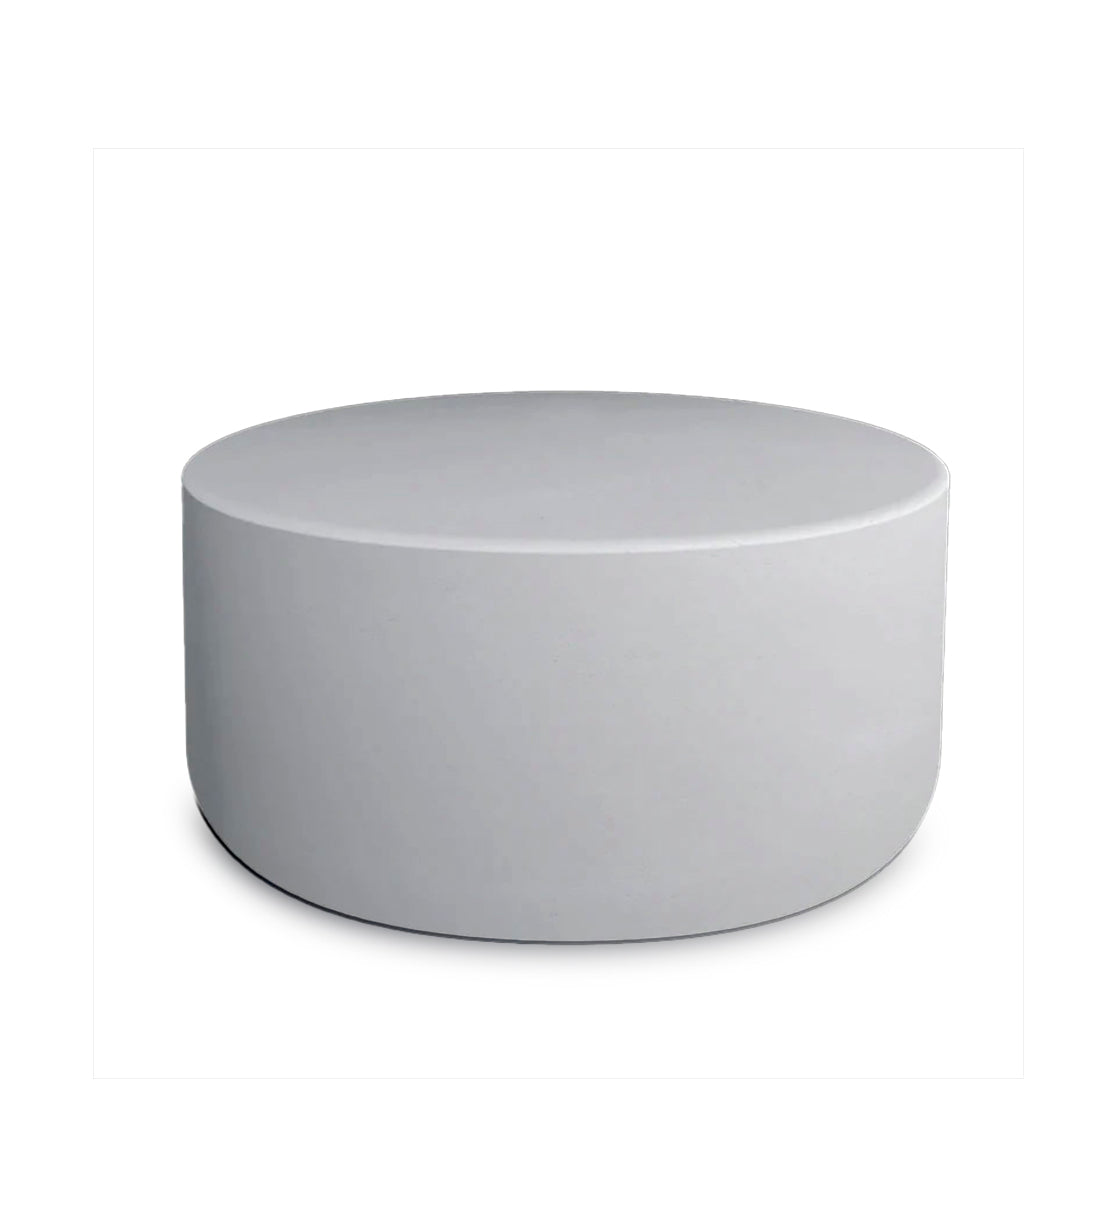 Studio redrock Cylinder Concrete Side Table - Medium